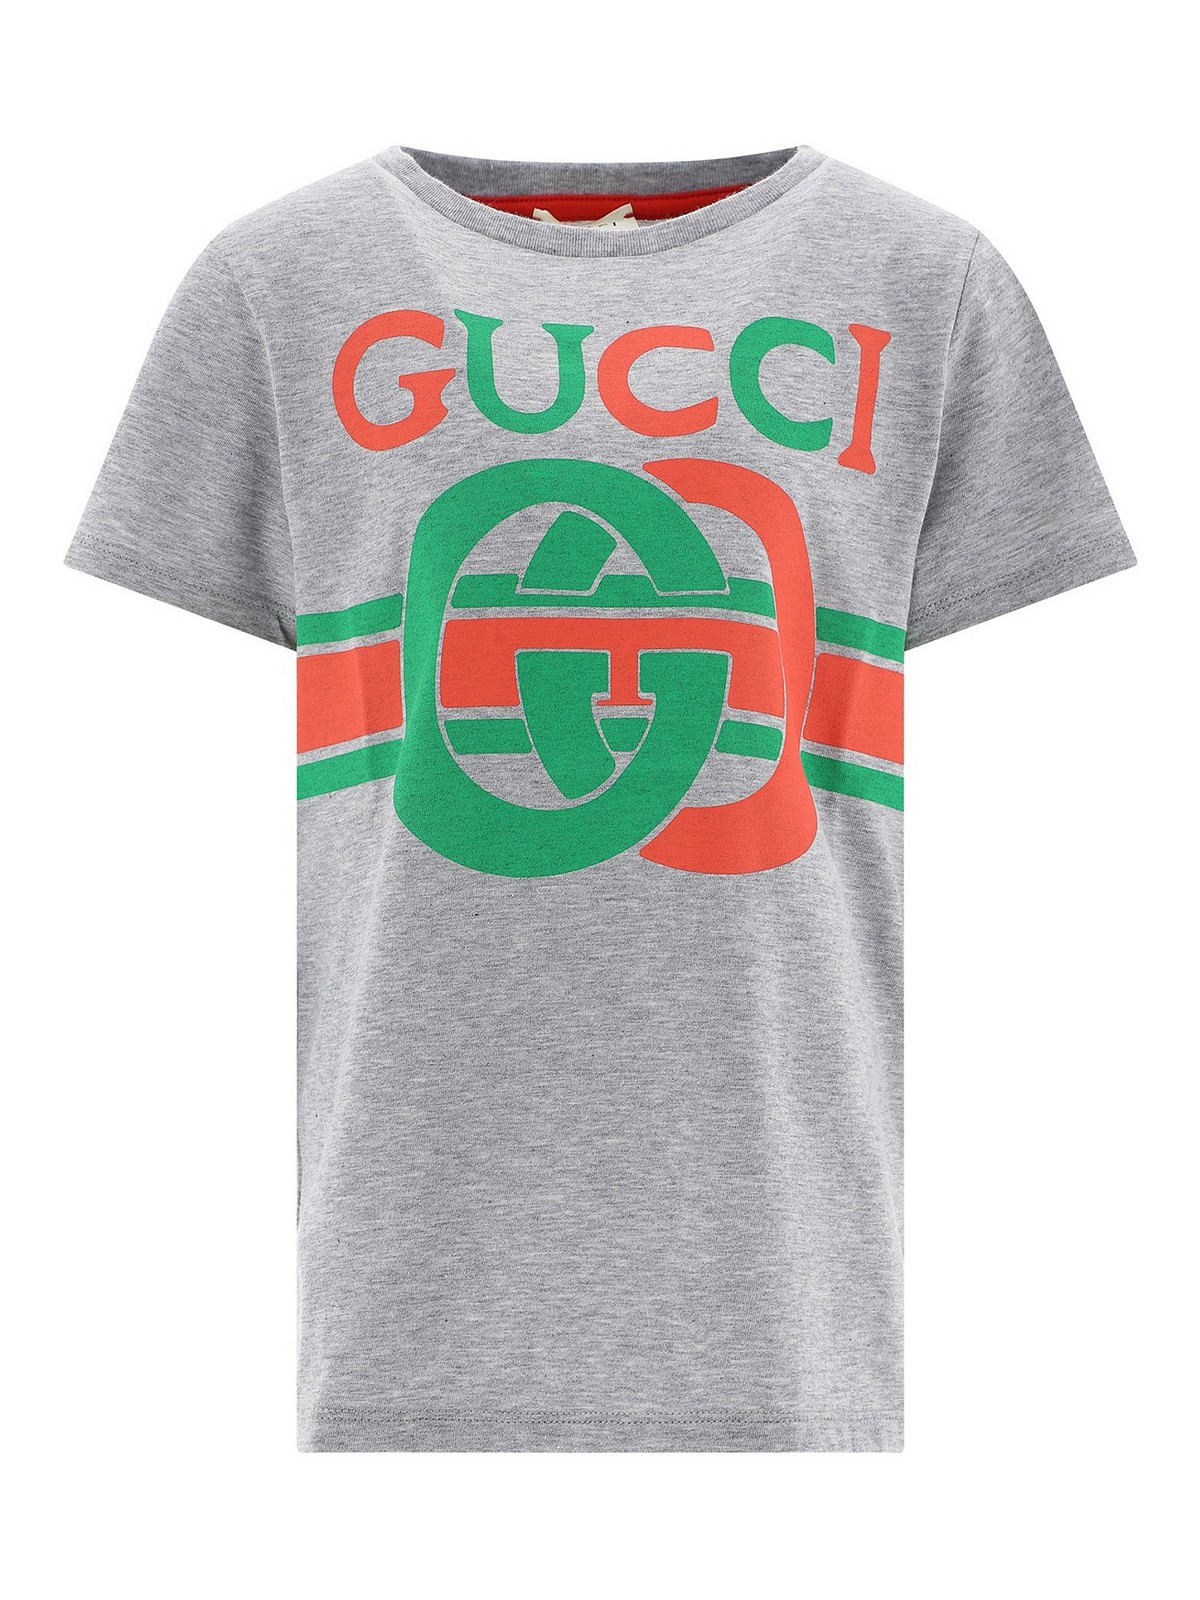 gucci gg logo t shirt